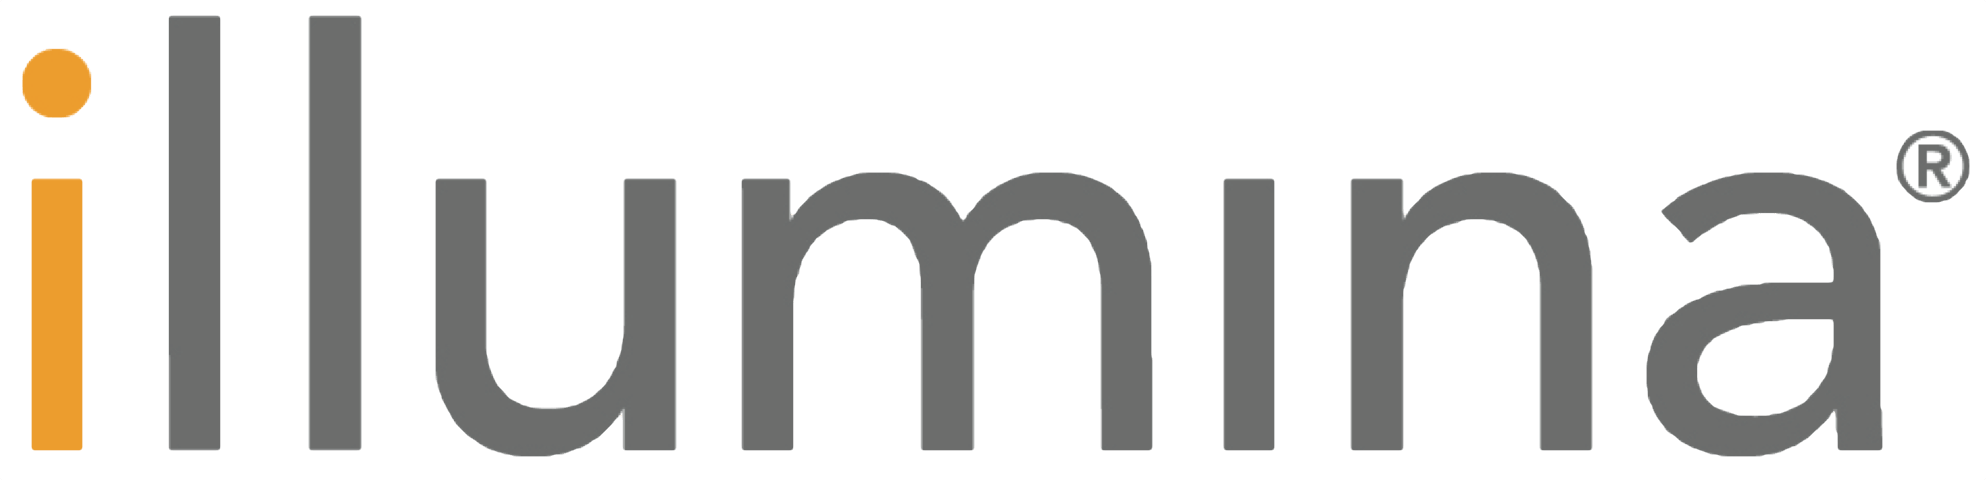 logotipo de illumina